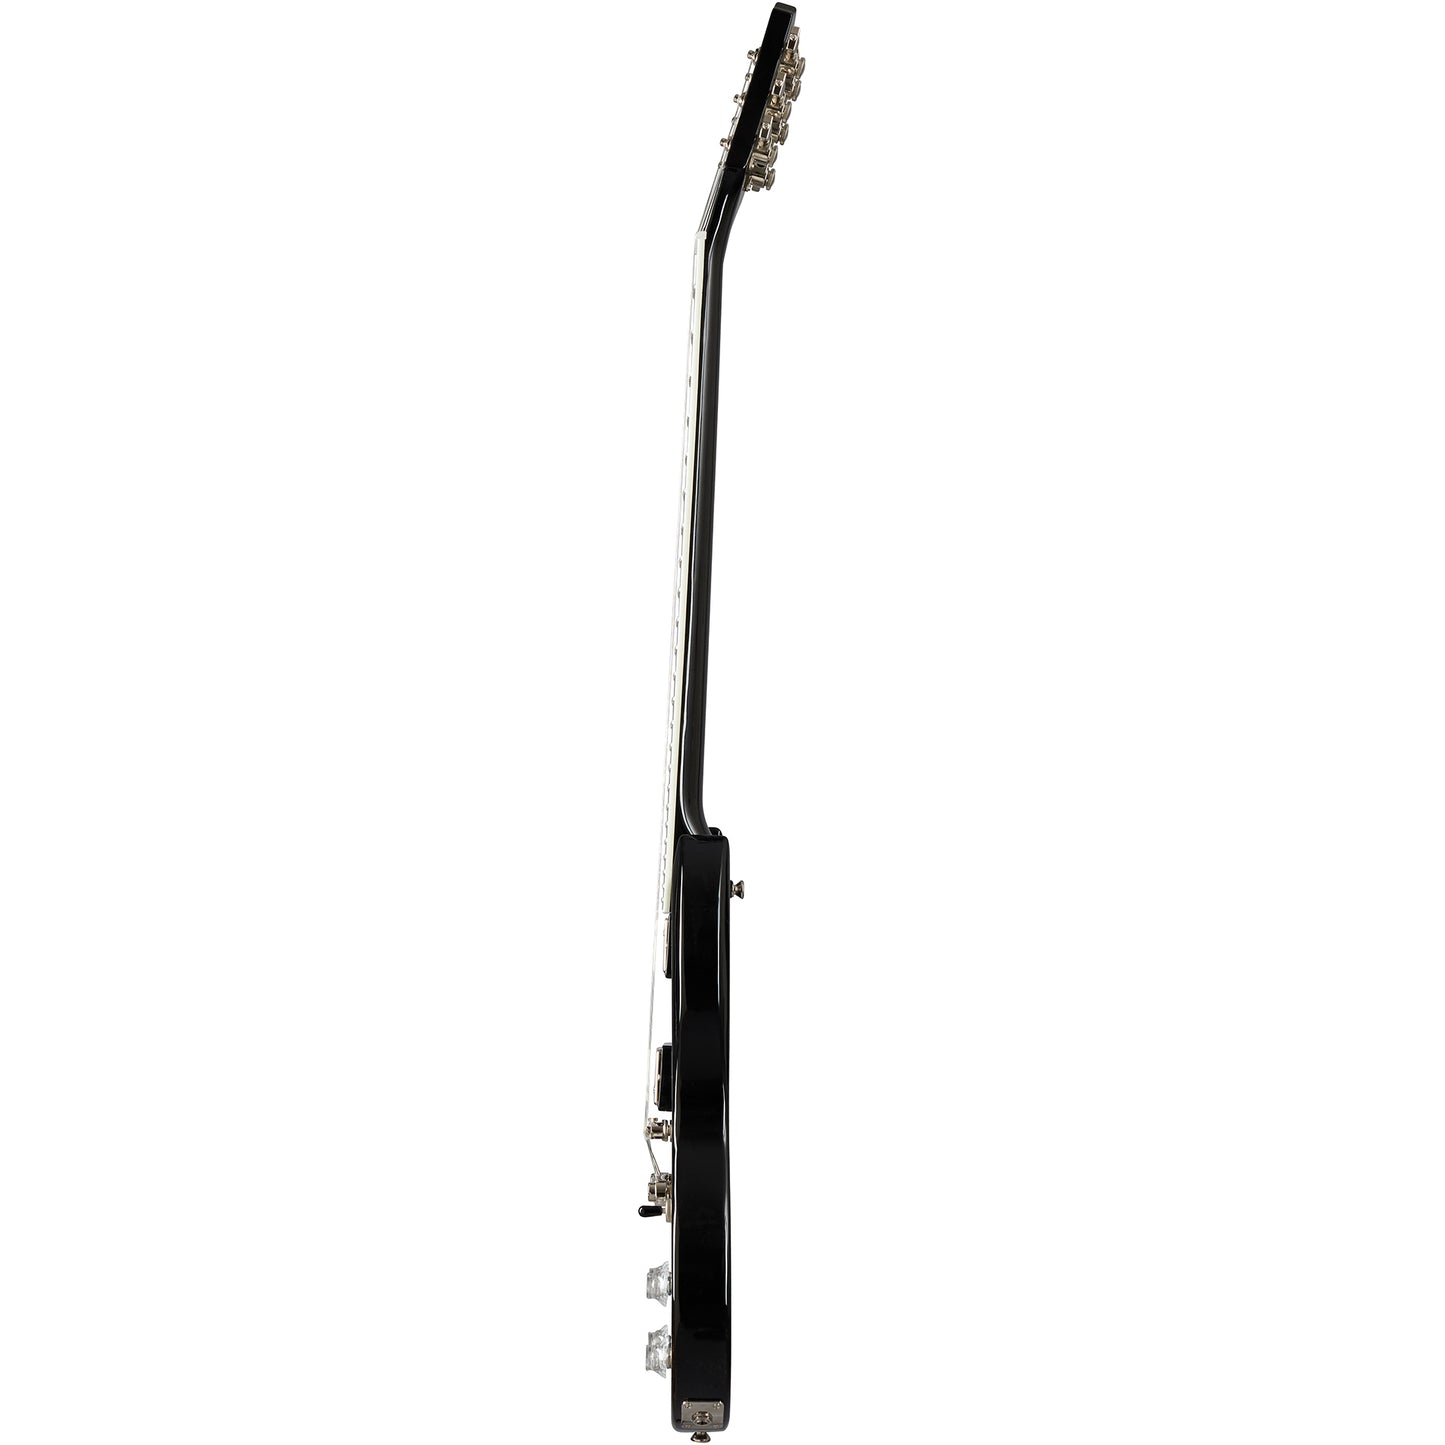 Epiphone SG Modern 6 String Electric Guitar in Figured Transparent Black Fade